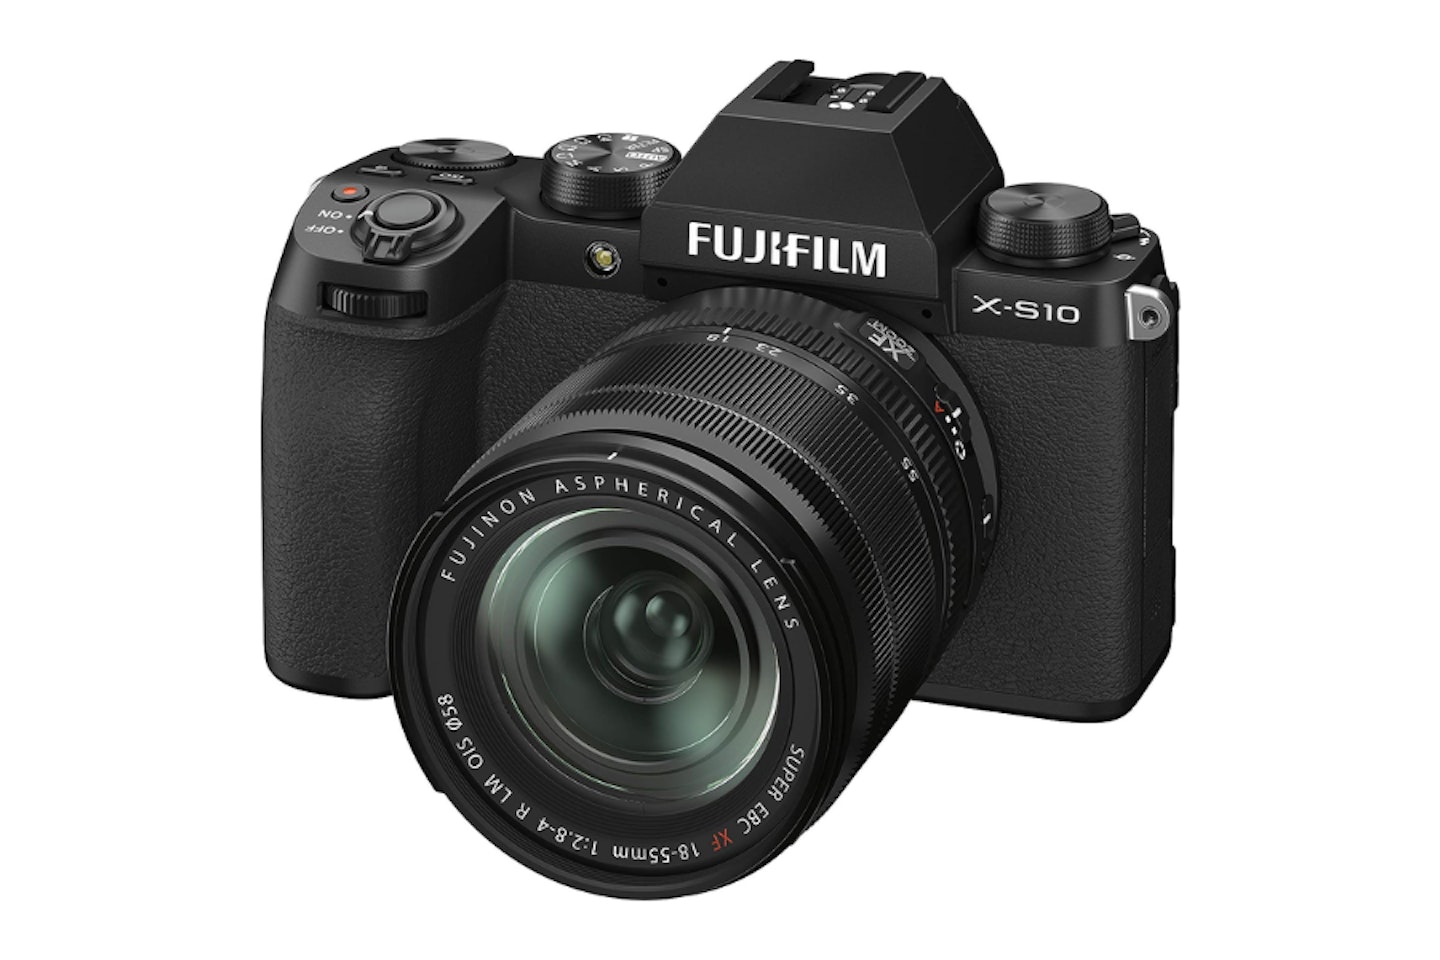 Fujifilm X-S10 Mirrorless Digital Camera - one of the best mirrorless cameras